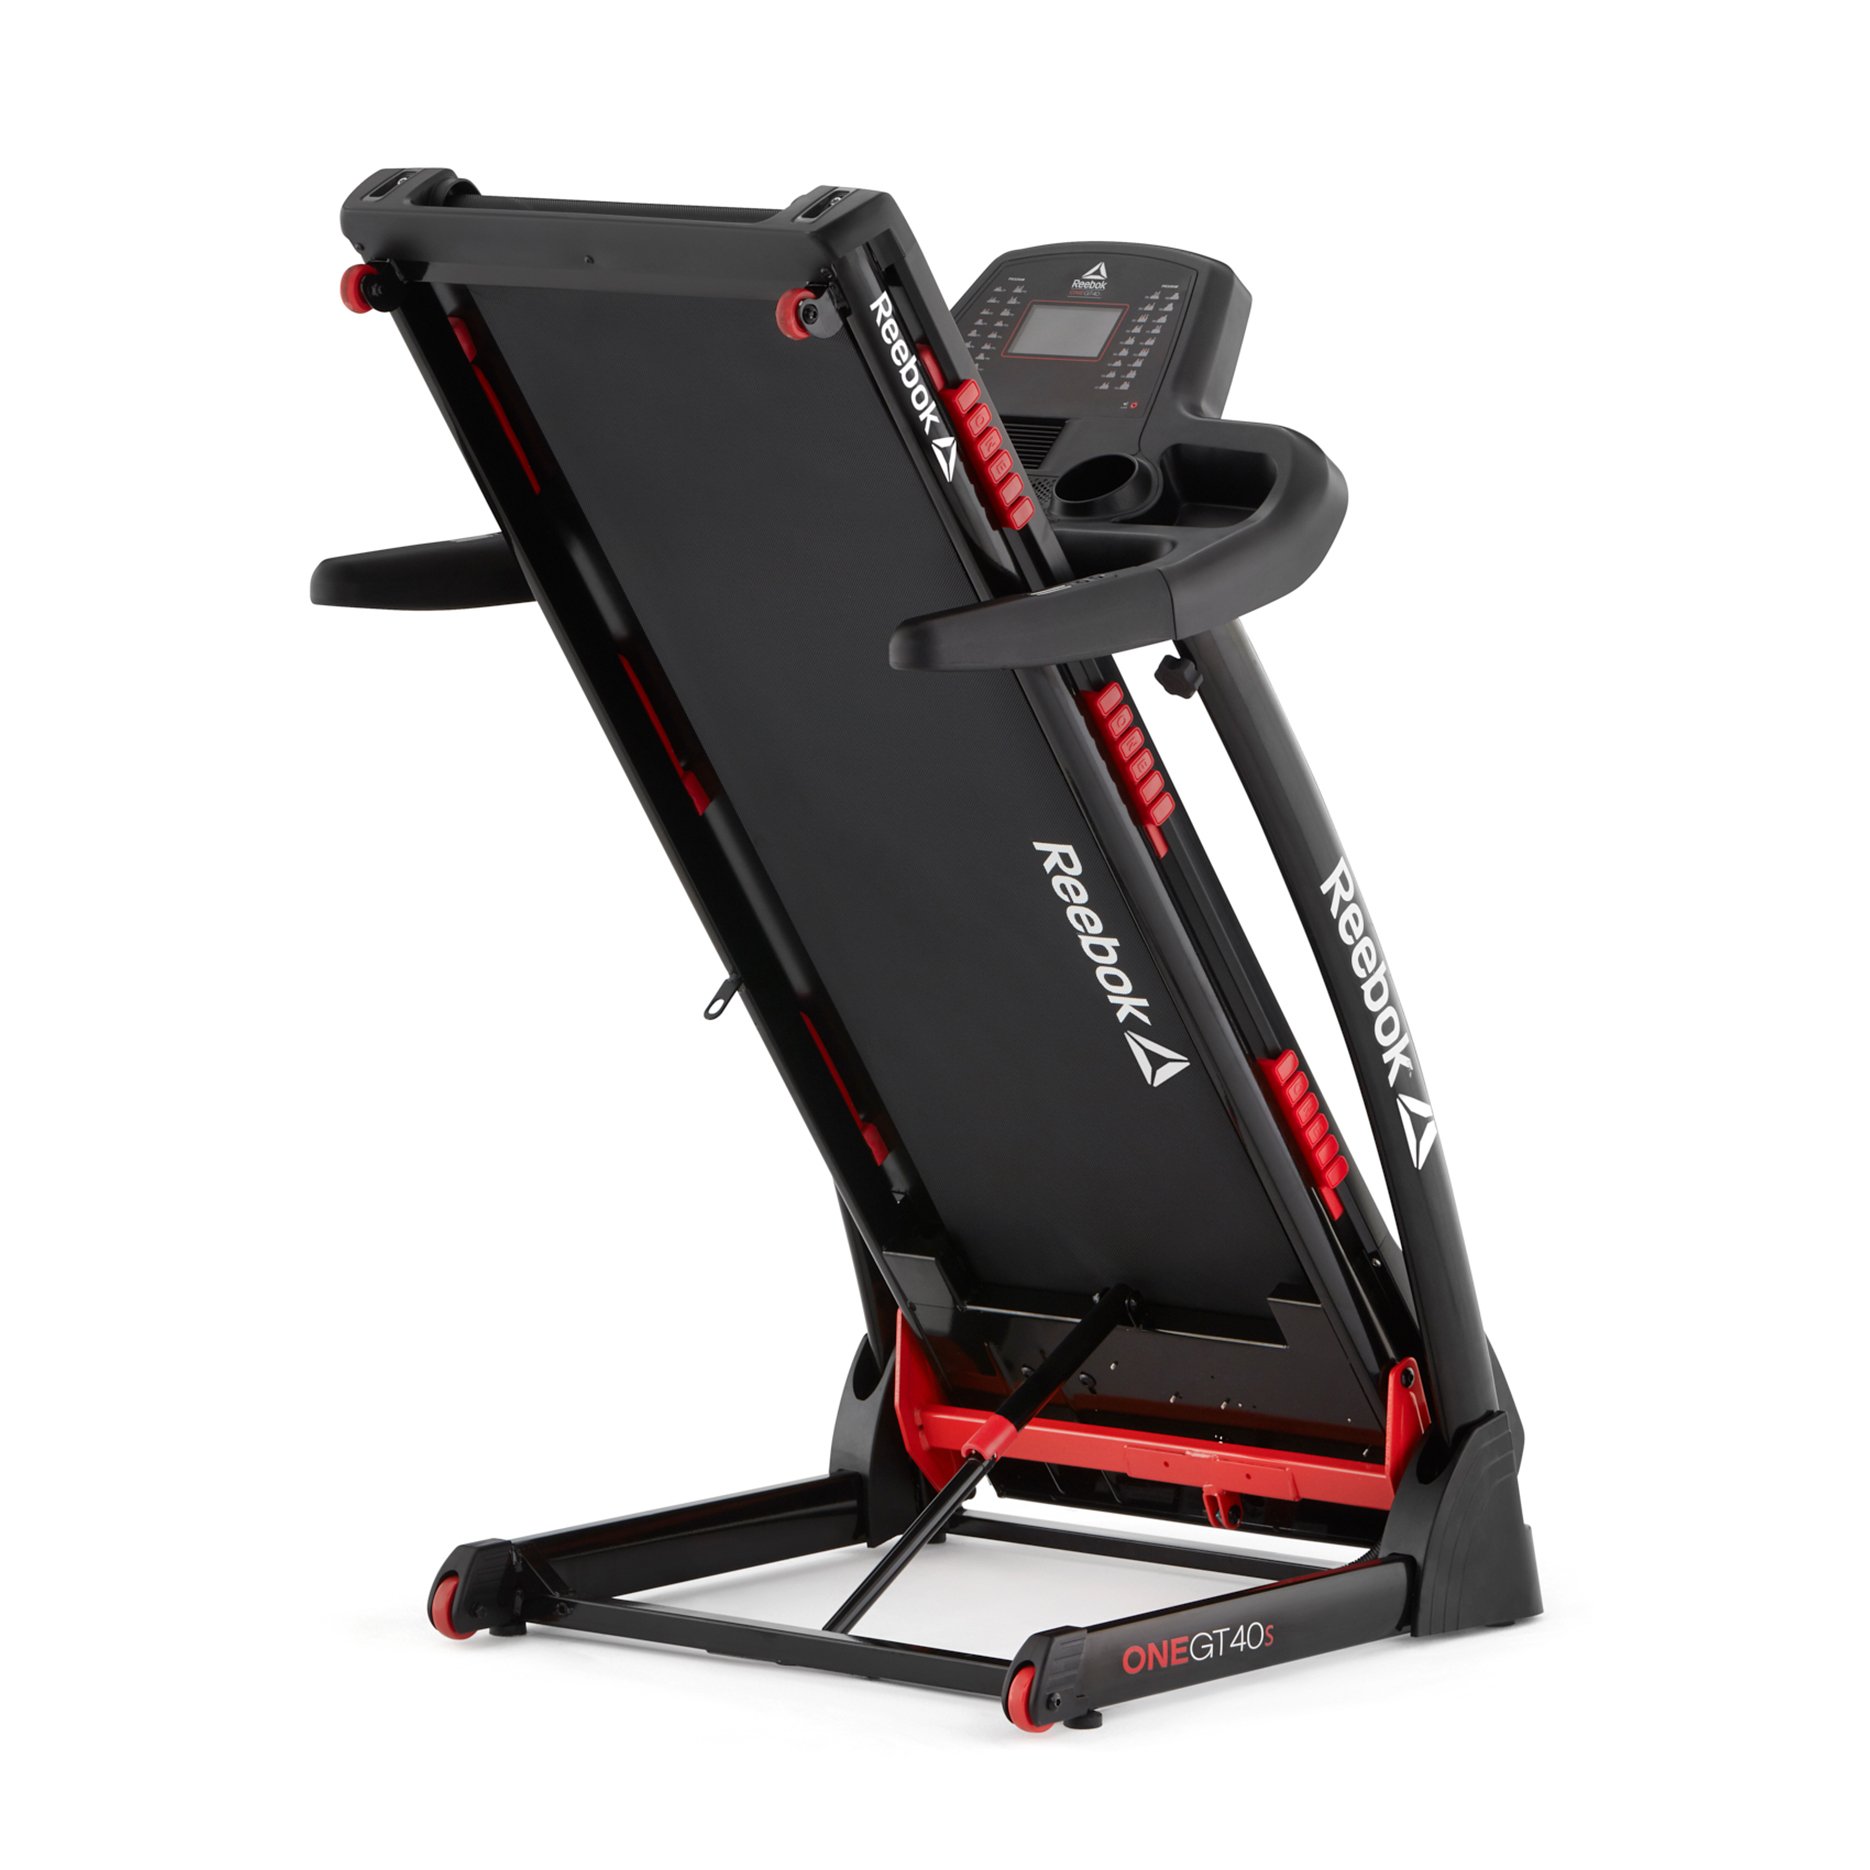 reebok one gt40s treadmill best price